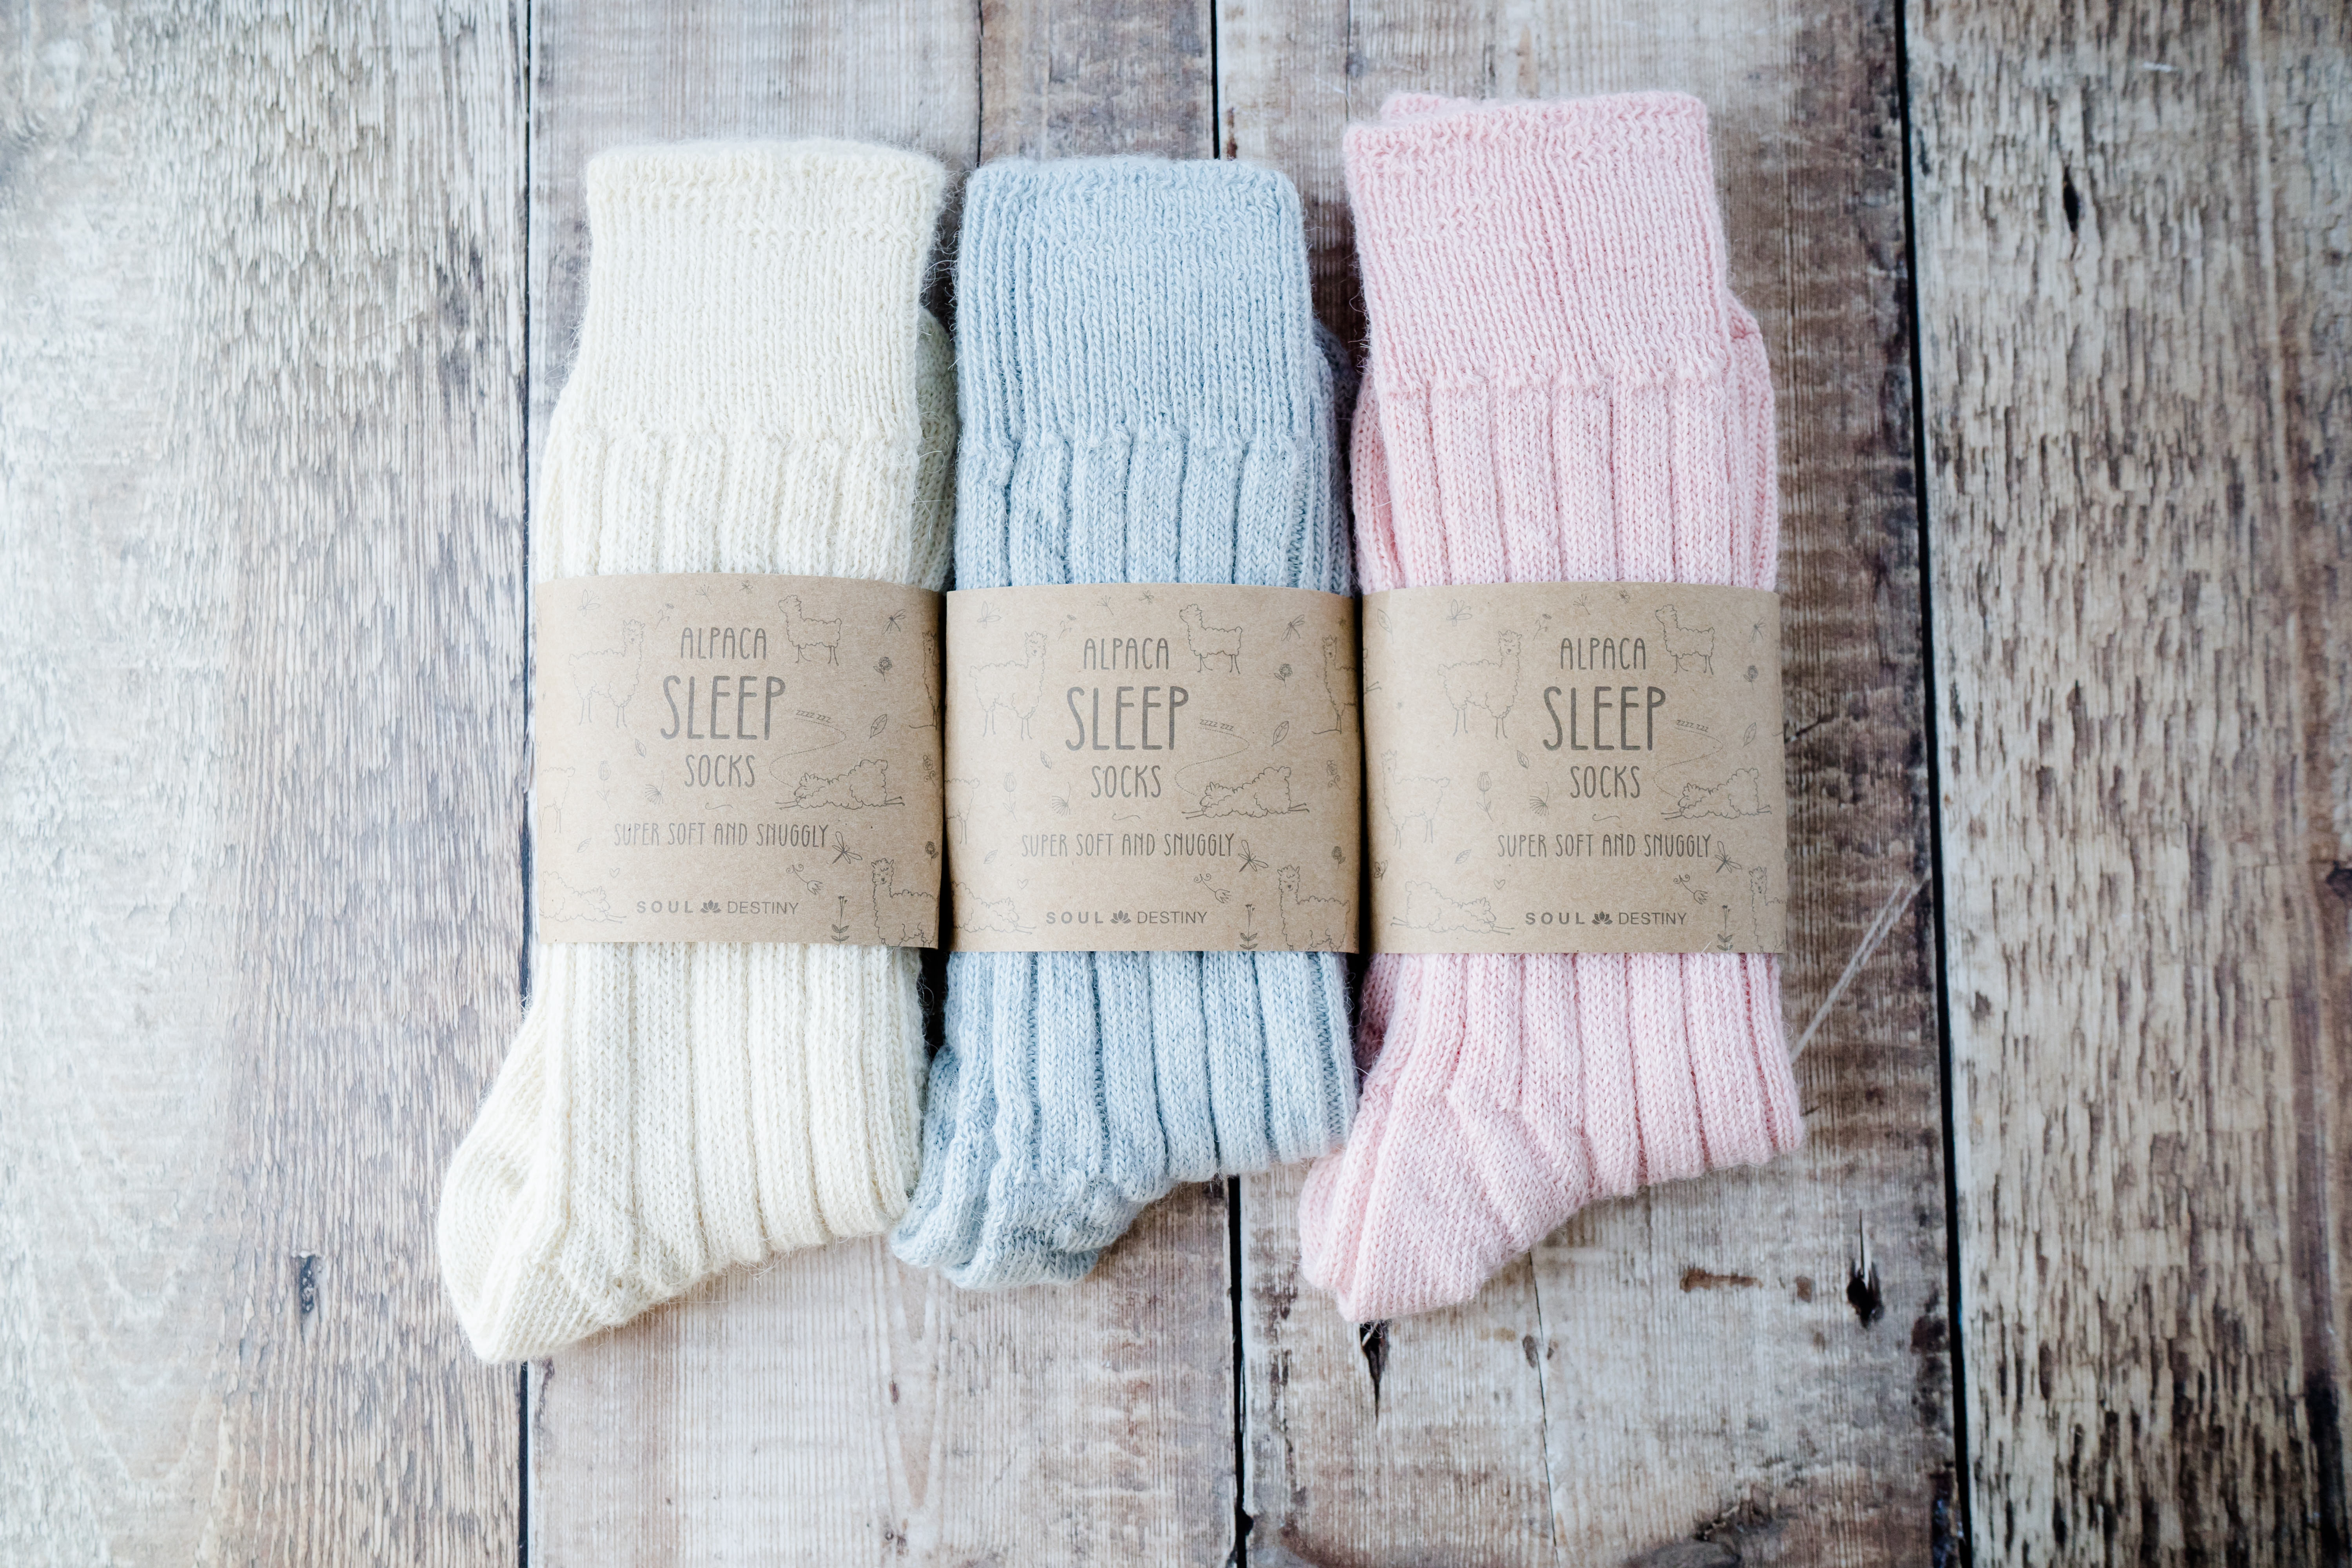 Gift Pack Idea I  3 Pairs of Alpaca Bed Socks Warm and Soft, 90% Alpaca Wool